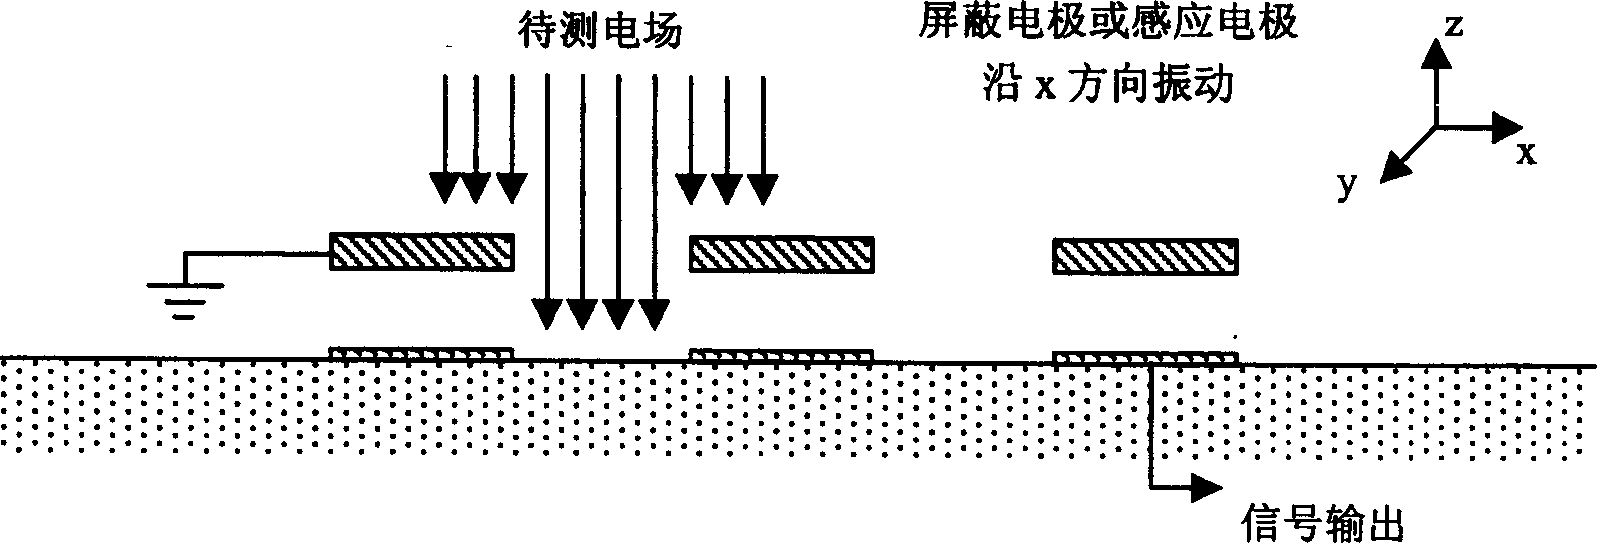 Parallel vibration pattern minitype electric field sensor